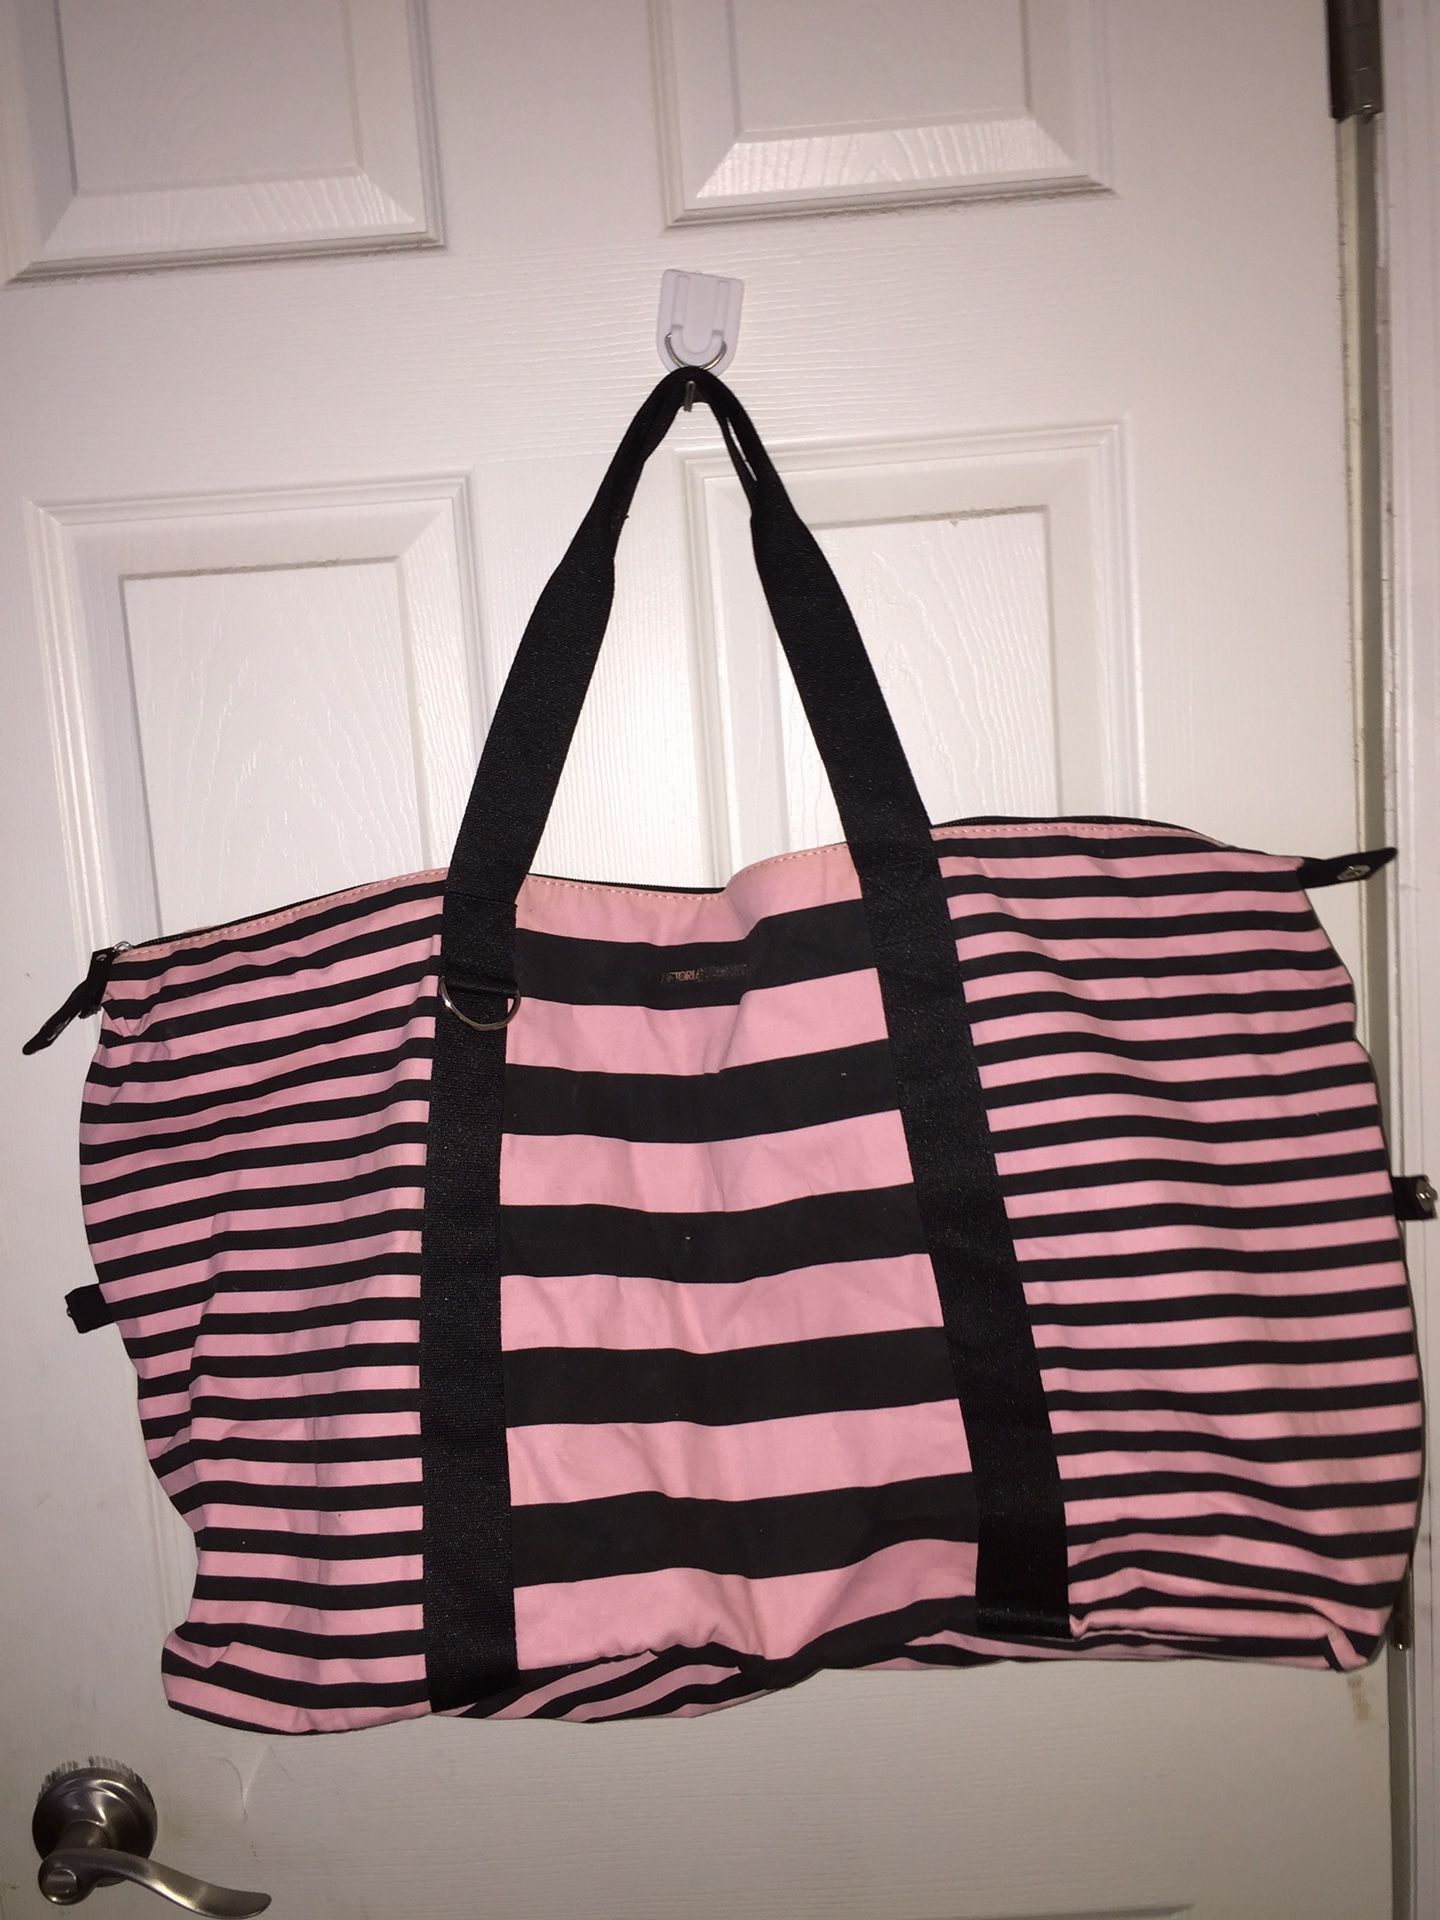 Victoria secret brand new pink black duffel bag handbag purse wallet accessories woman’s bag Michael kors gucci Kate spade ysl channel traveling bag